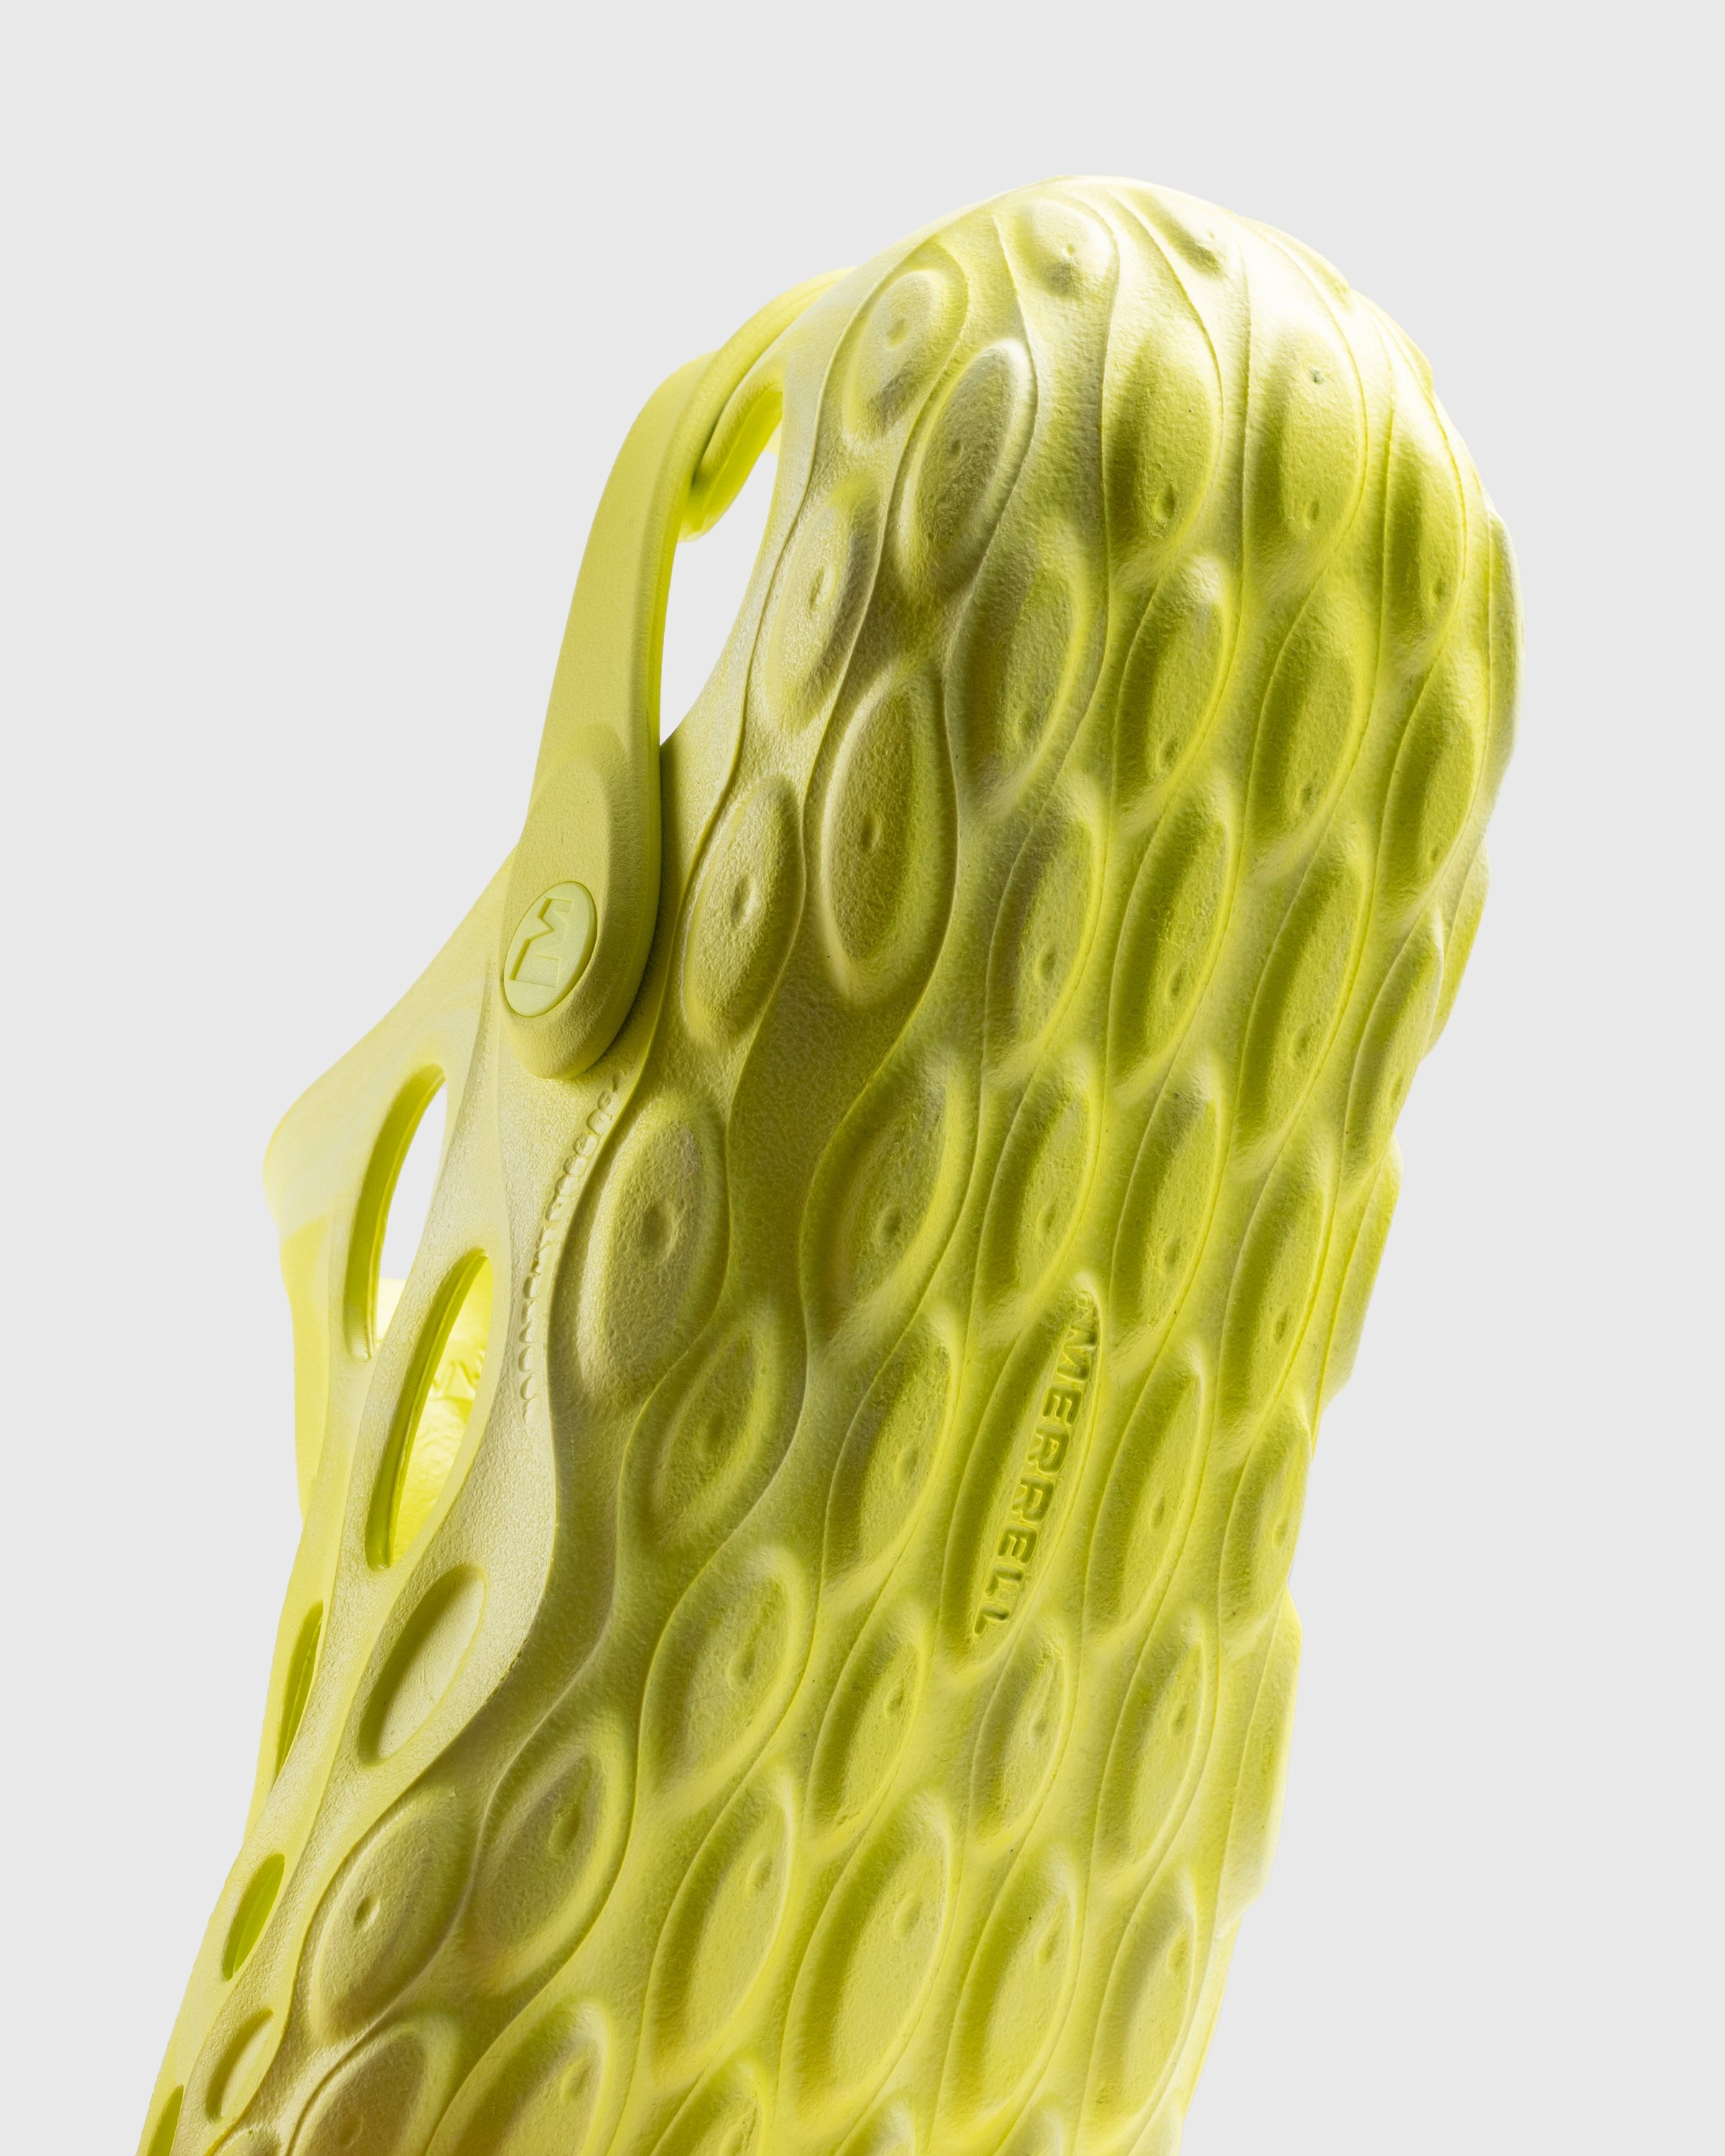 Merrell – Hydro Moc Pomelo - Sandals - Yellow - Image 6